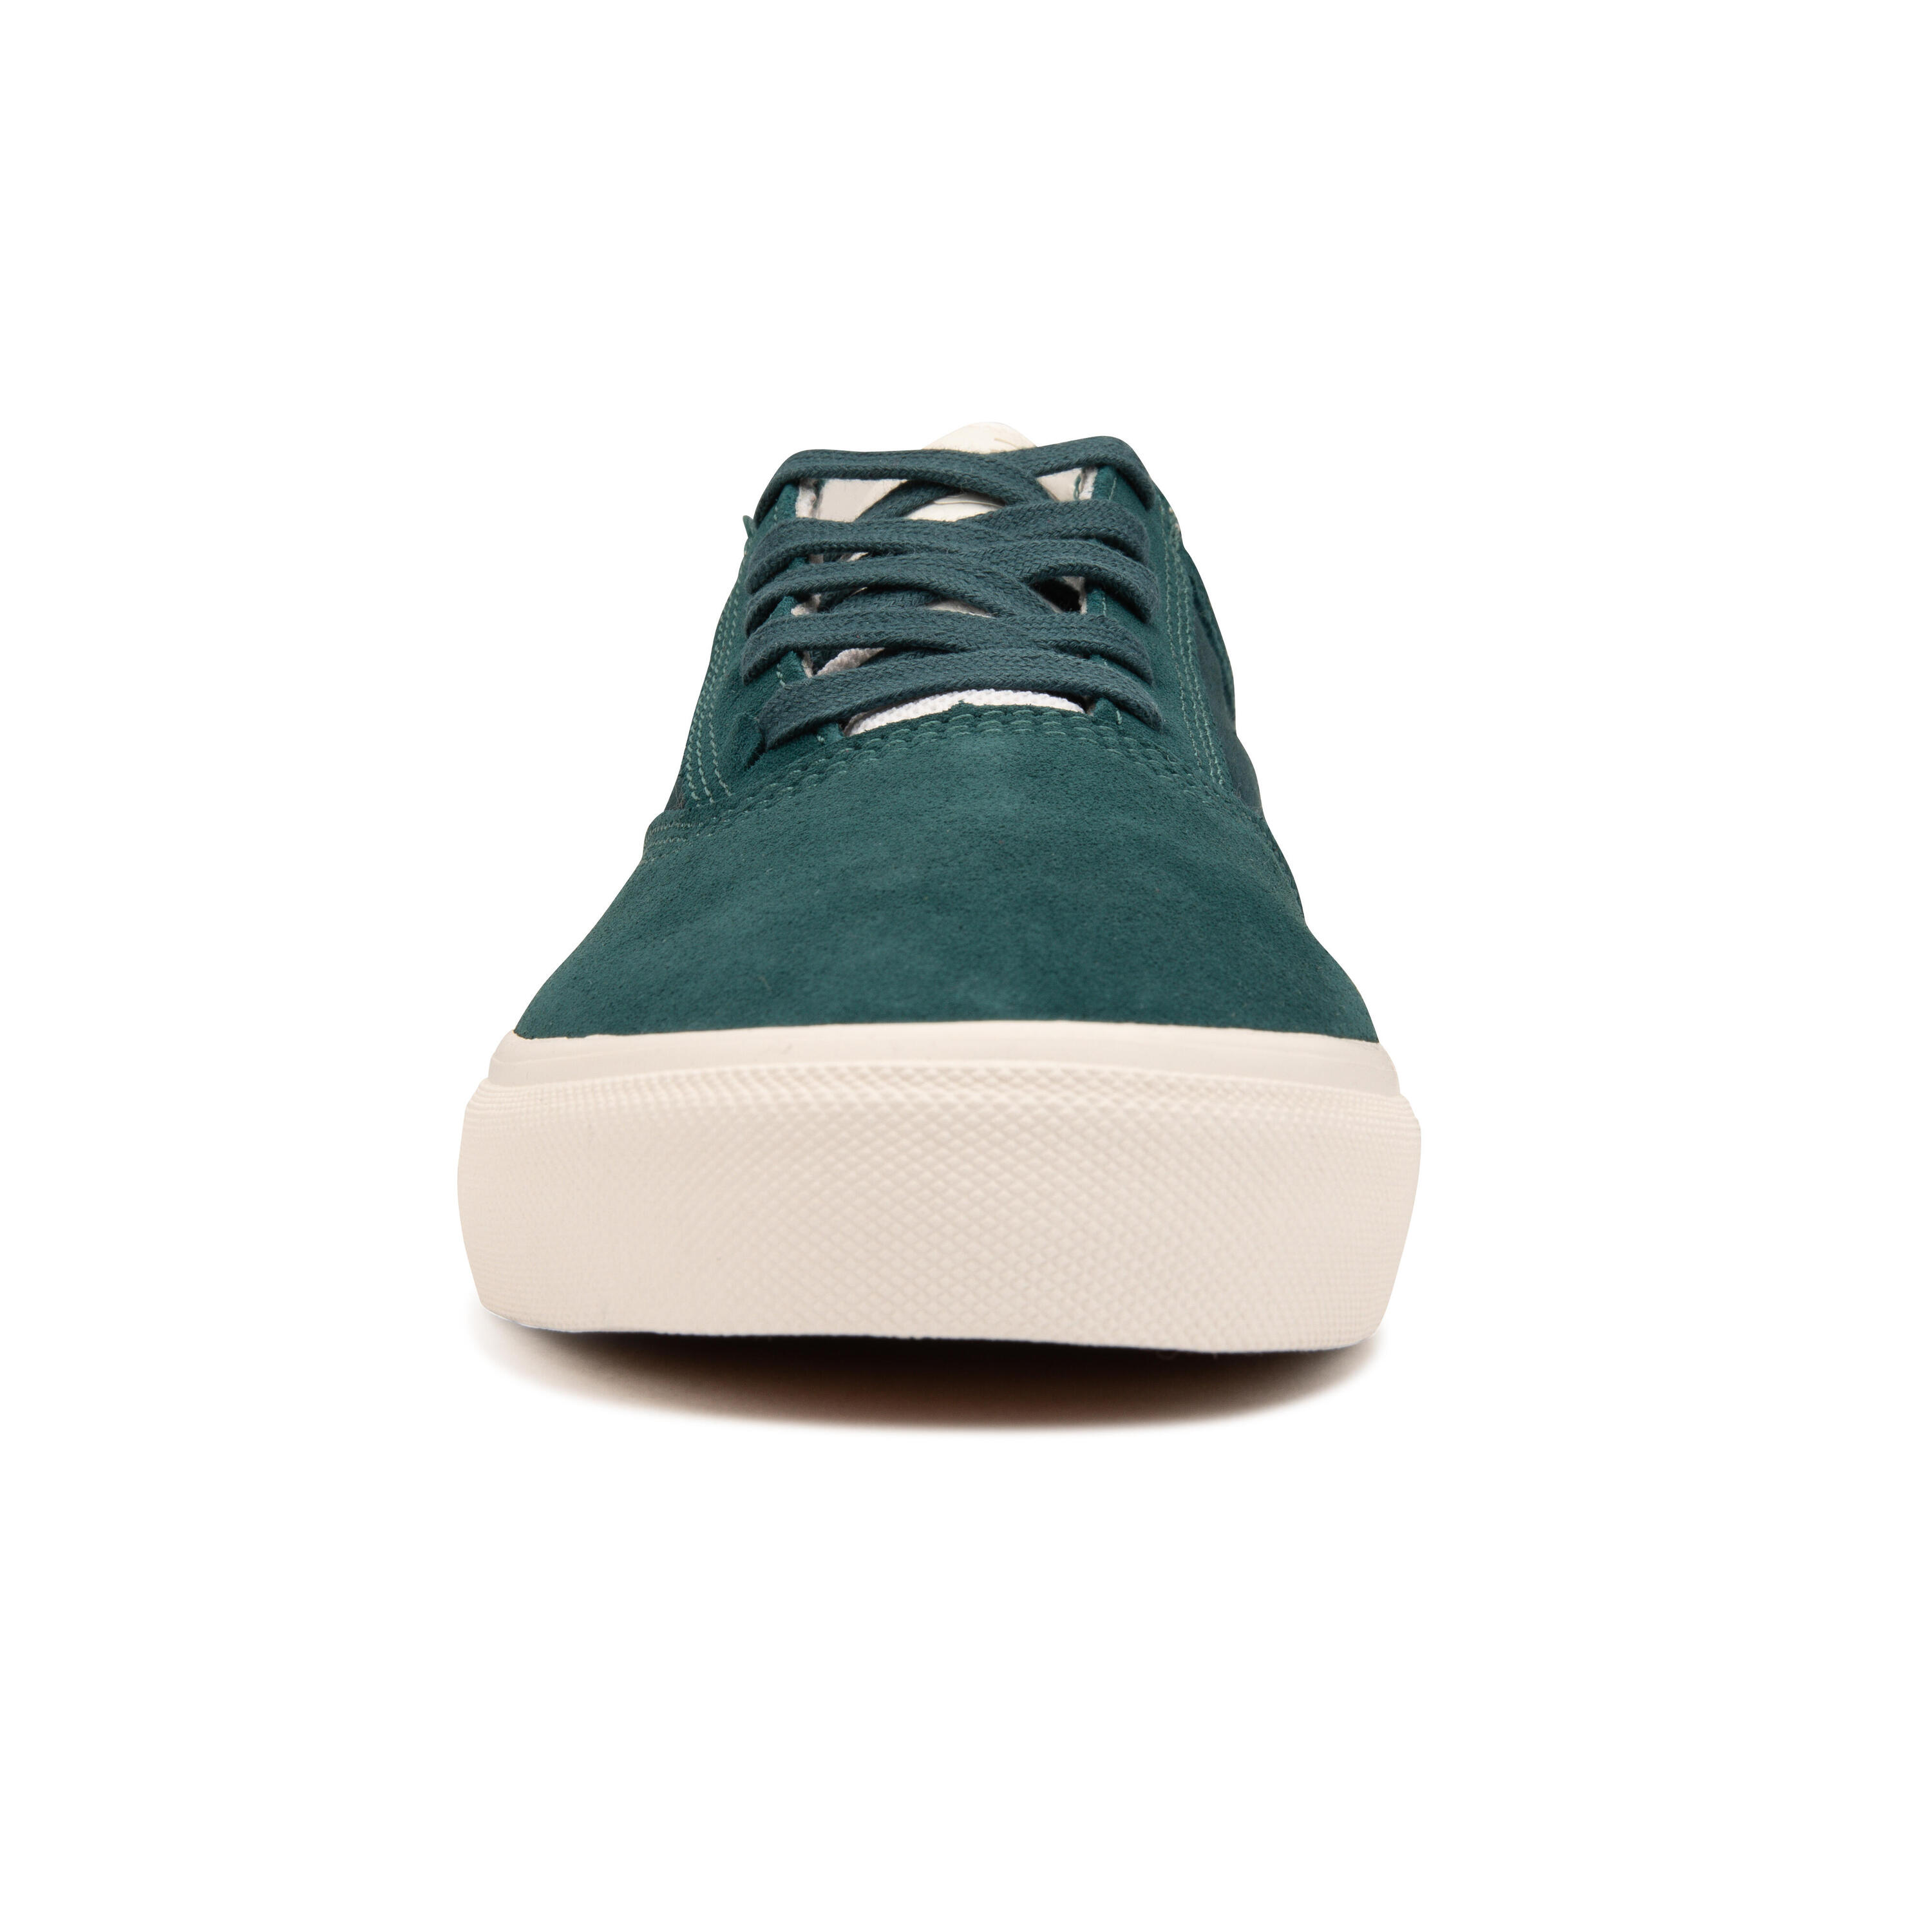 Adult Vulcanised Skate Shoes Vulca 500 II - Green/White 7/18